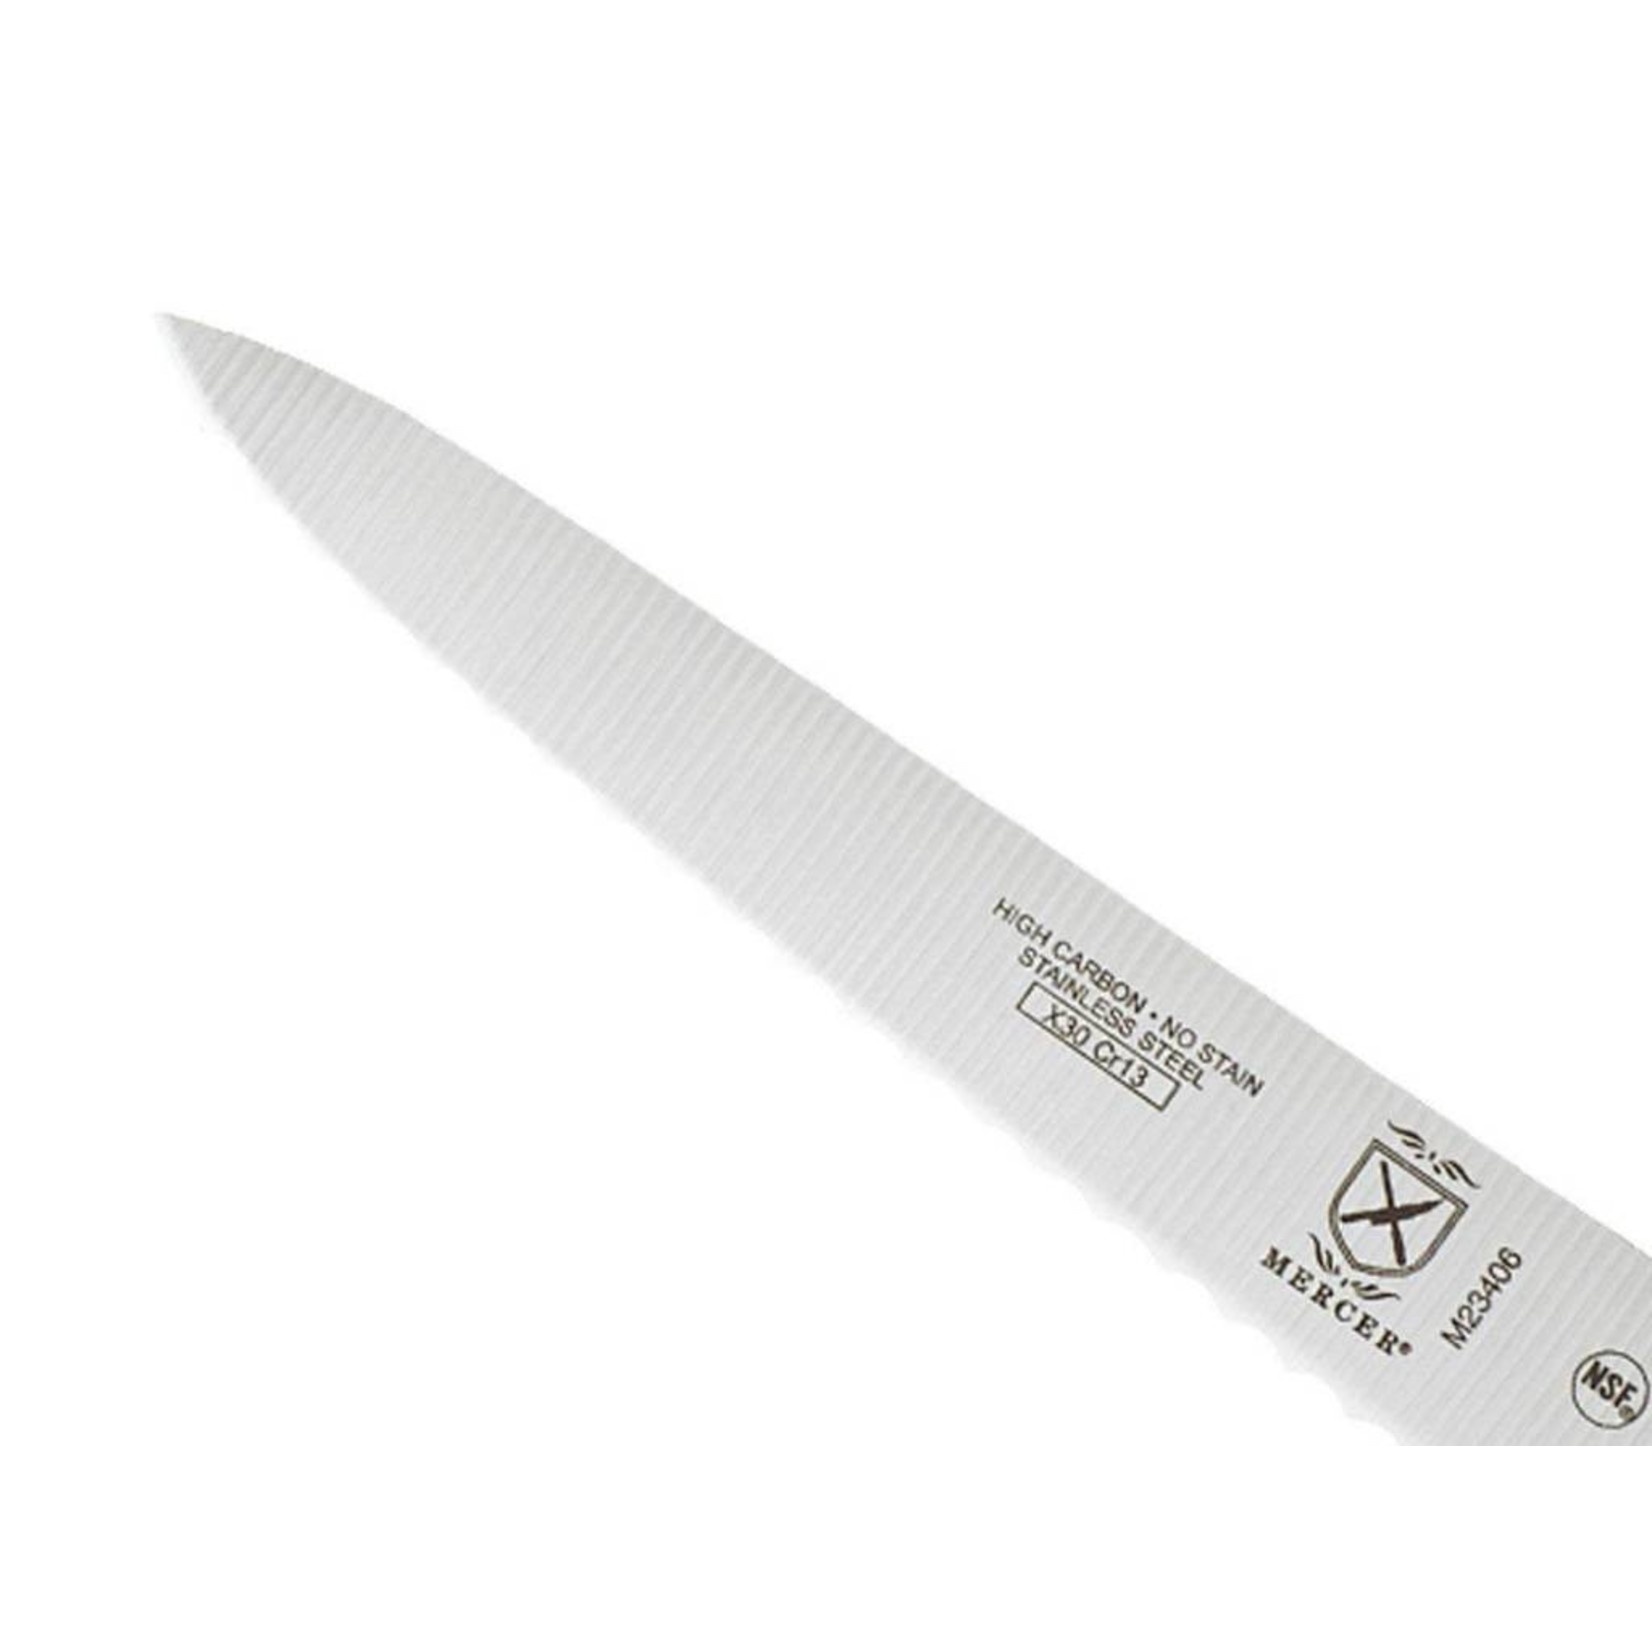 Mercer Culinary Mercer Culinary - Millennia Wavy Edge Utility Knife, 6 Inch